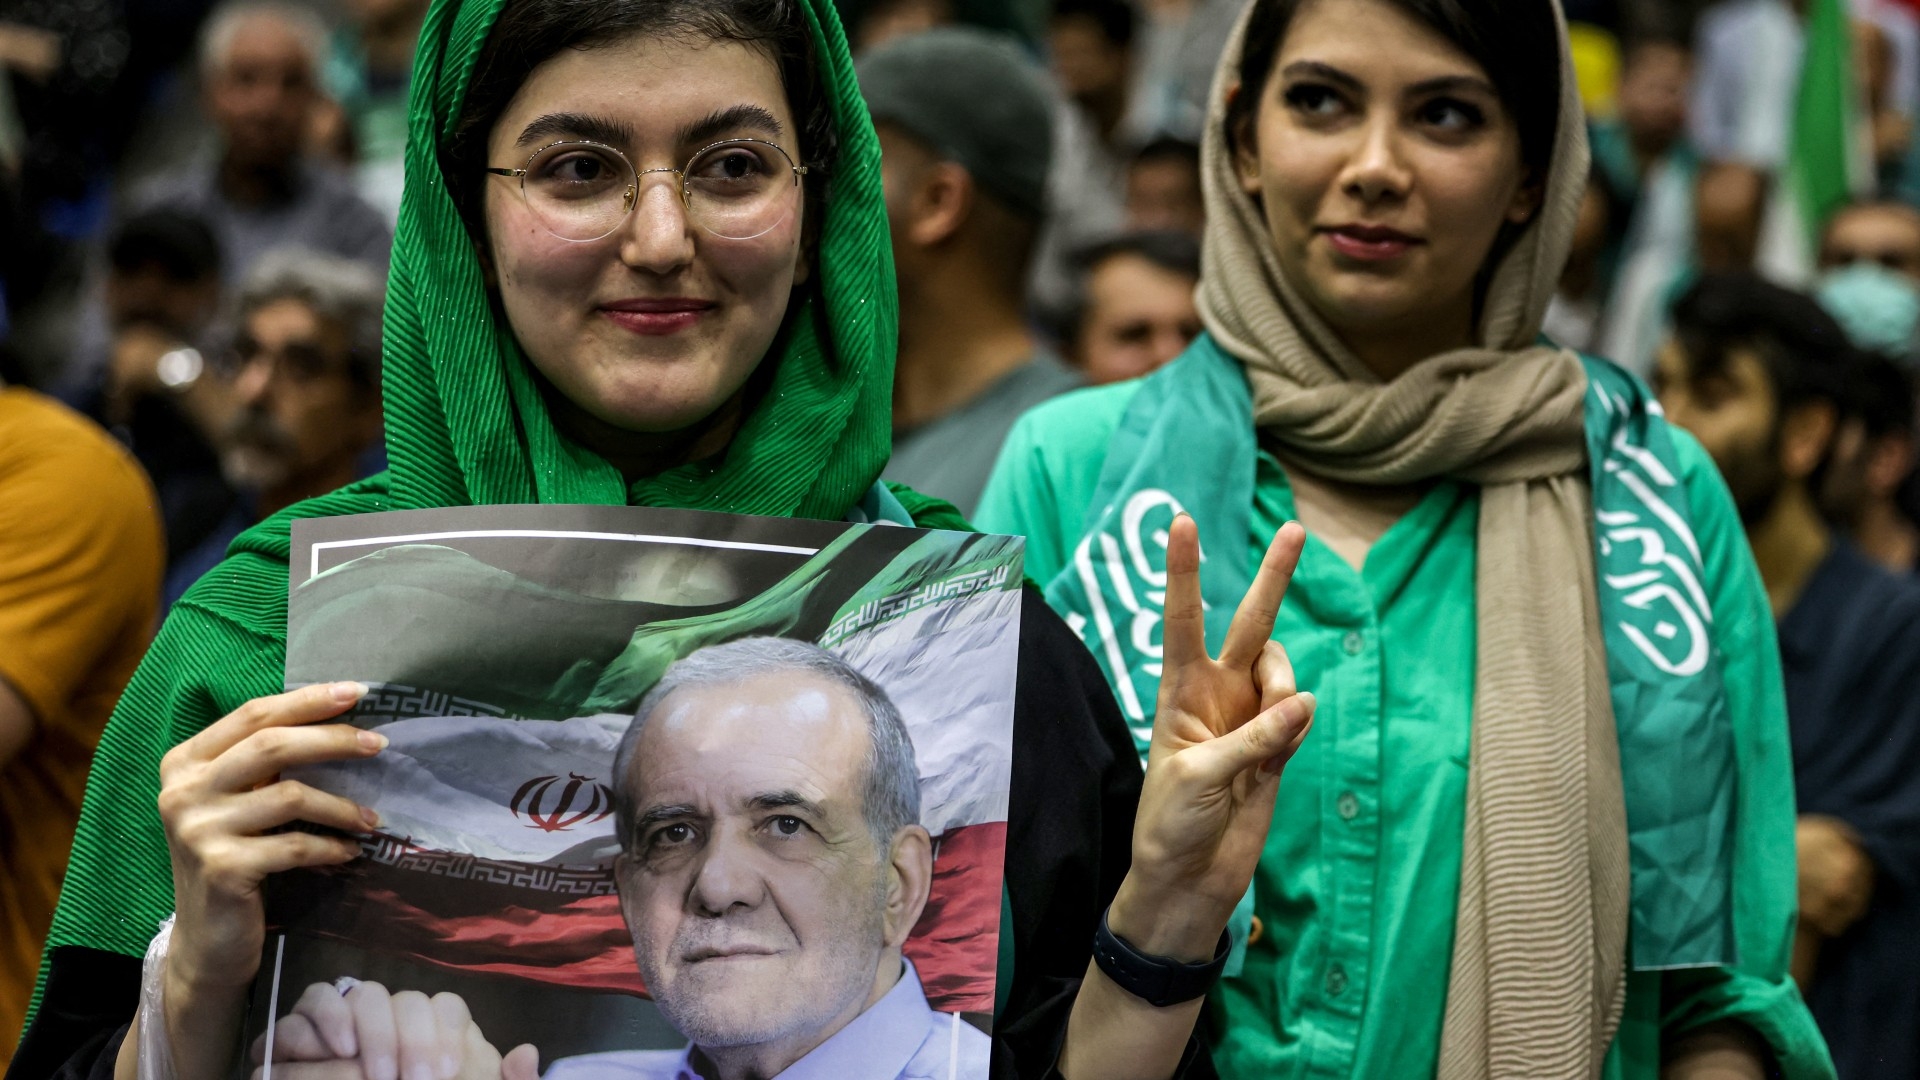 Women attend a campaign rally for reformist candidate Massoud Pezeshkian at Afrasiabi Stadium in Tehran on 23 June (Atta Kenare/AFP)